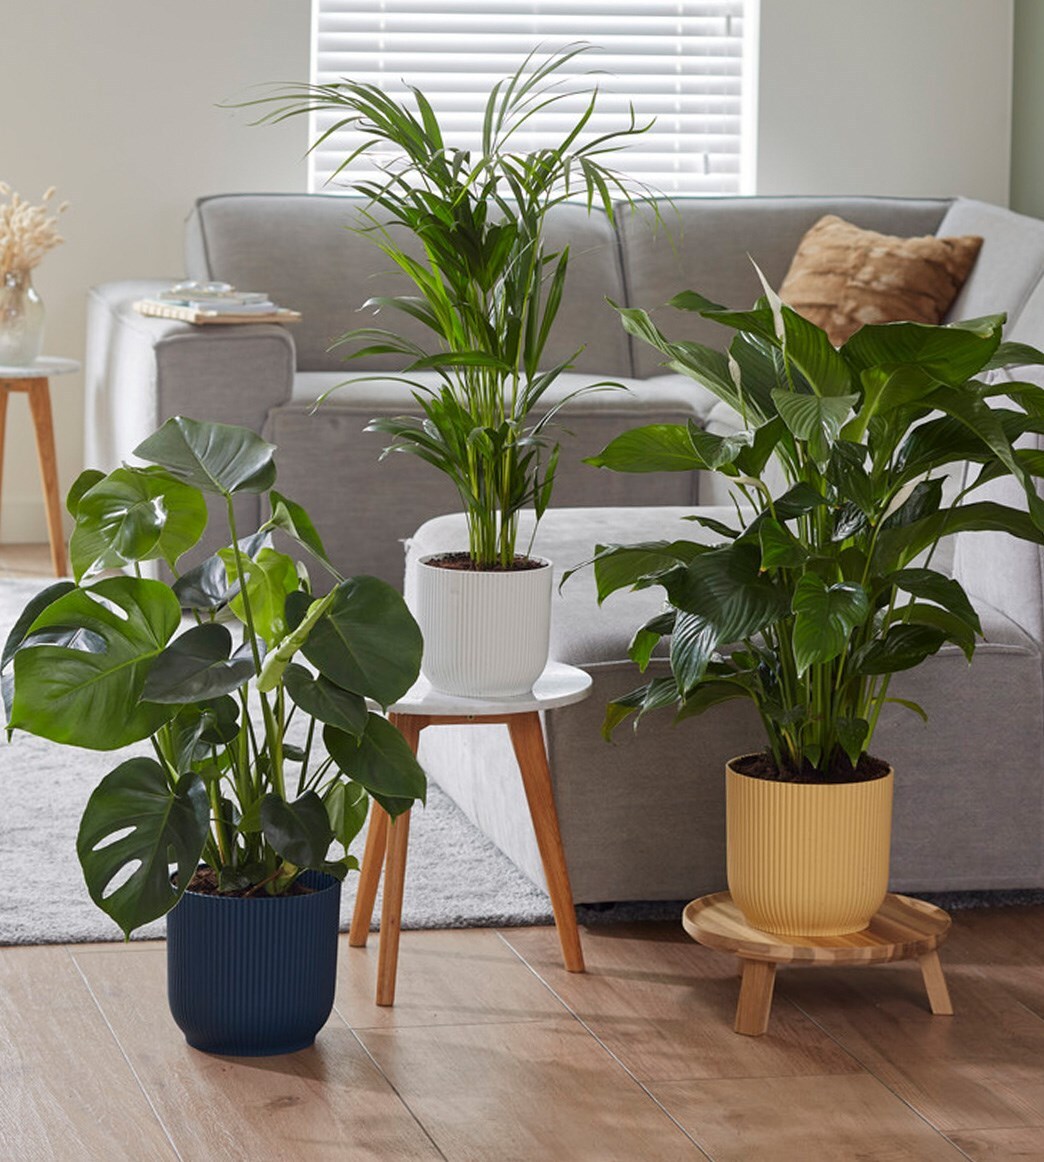 Inspiration - Indoor plant & pot combinations